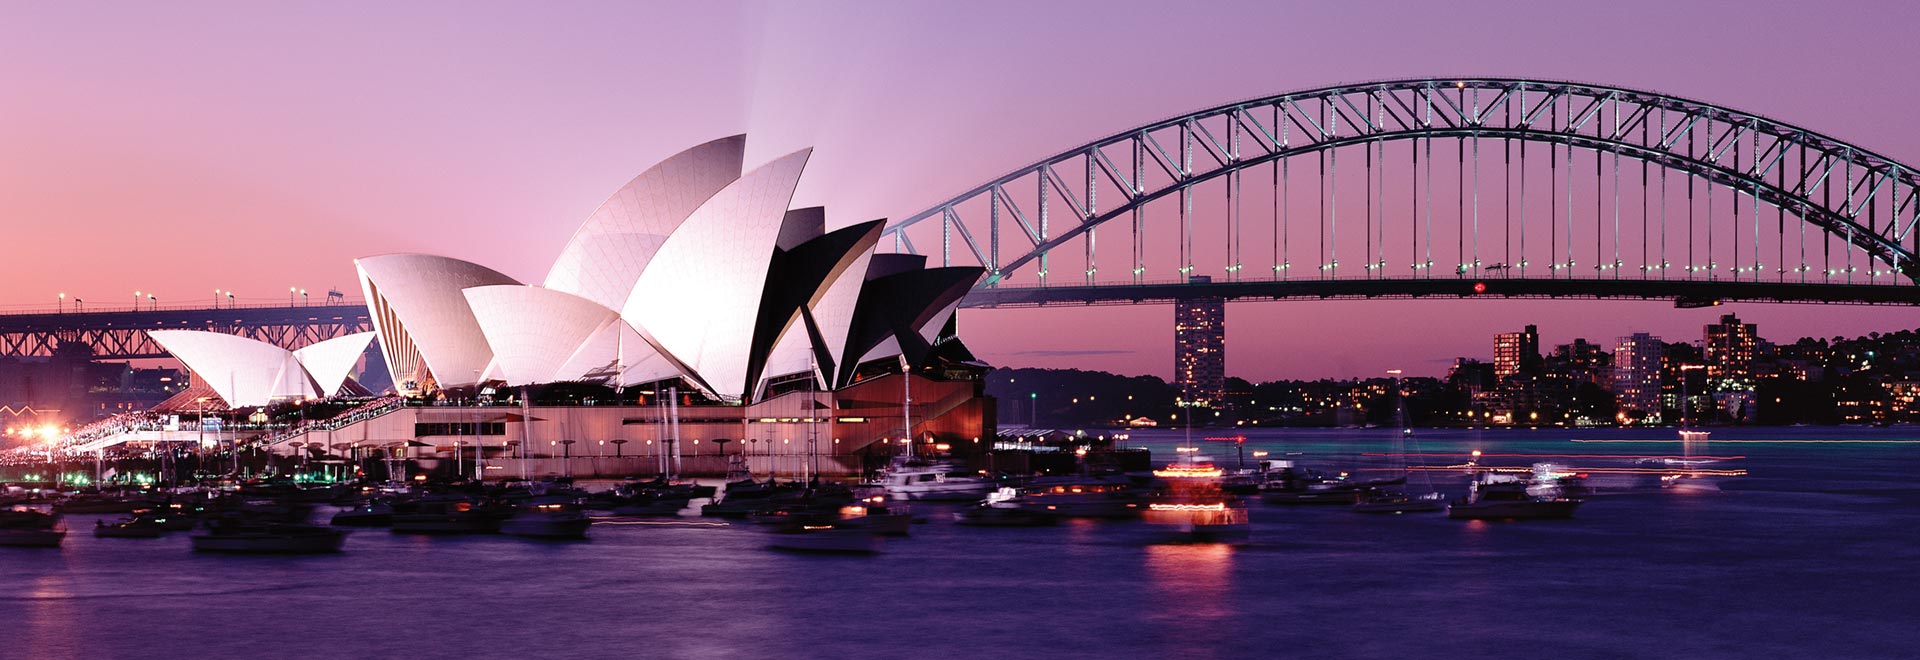 Asia Australia New Zealand Lands Down Under Sydney Opera House MH